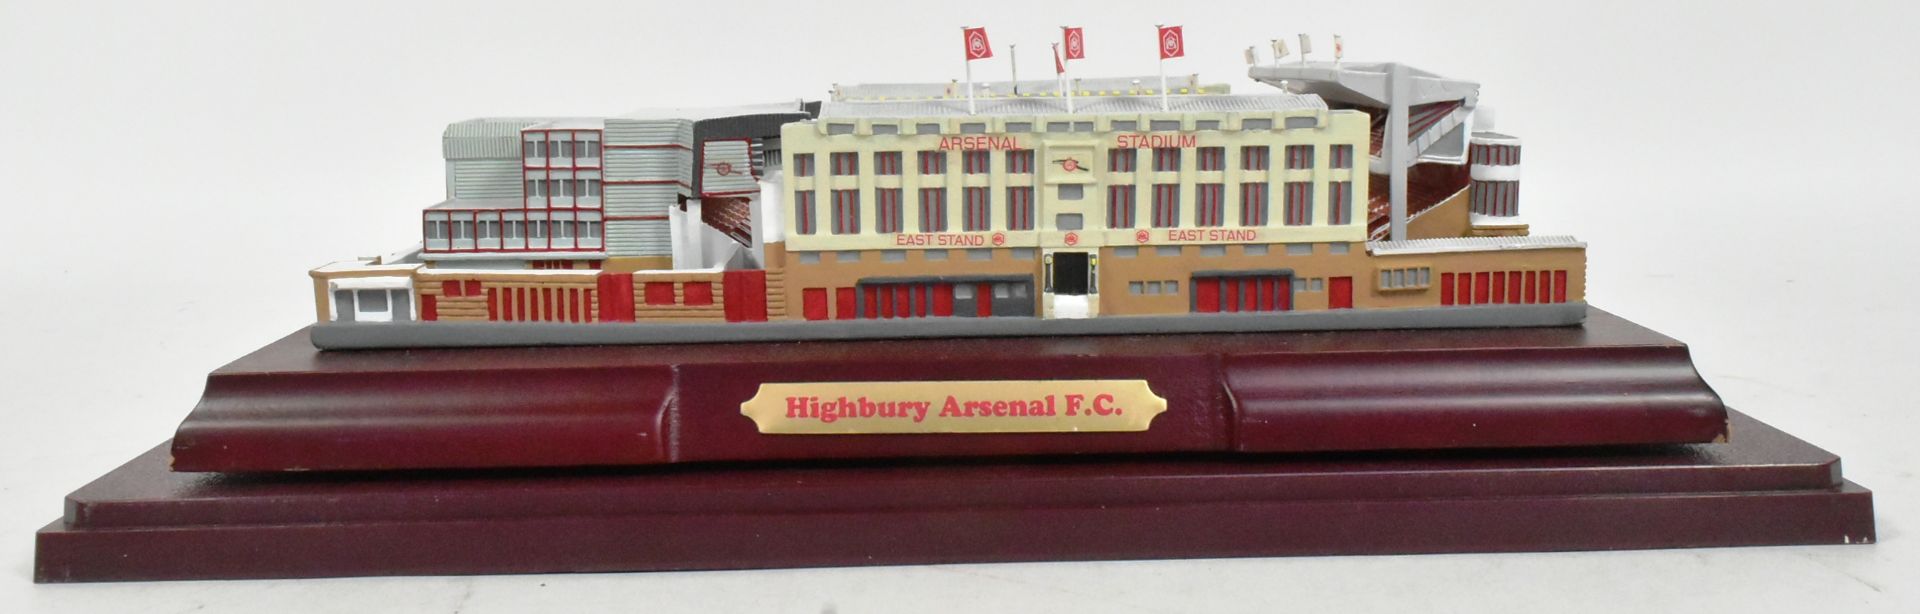 OFFICIAL ARSENAL FC HIGHBURY REPLICA STADIUM MODEL - Image 2 of 5